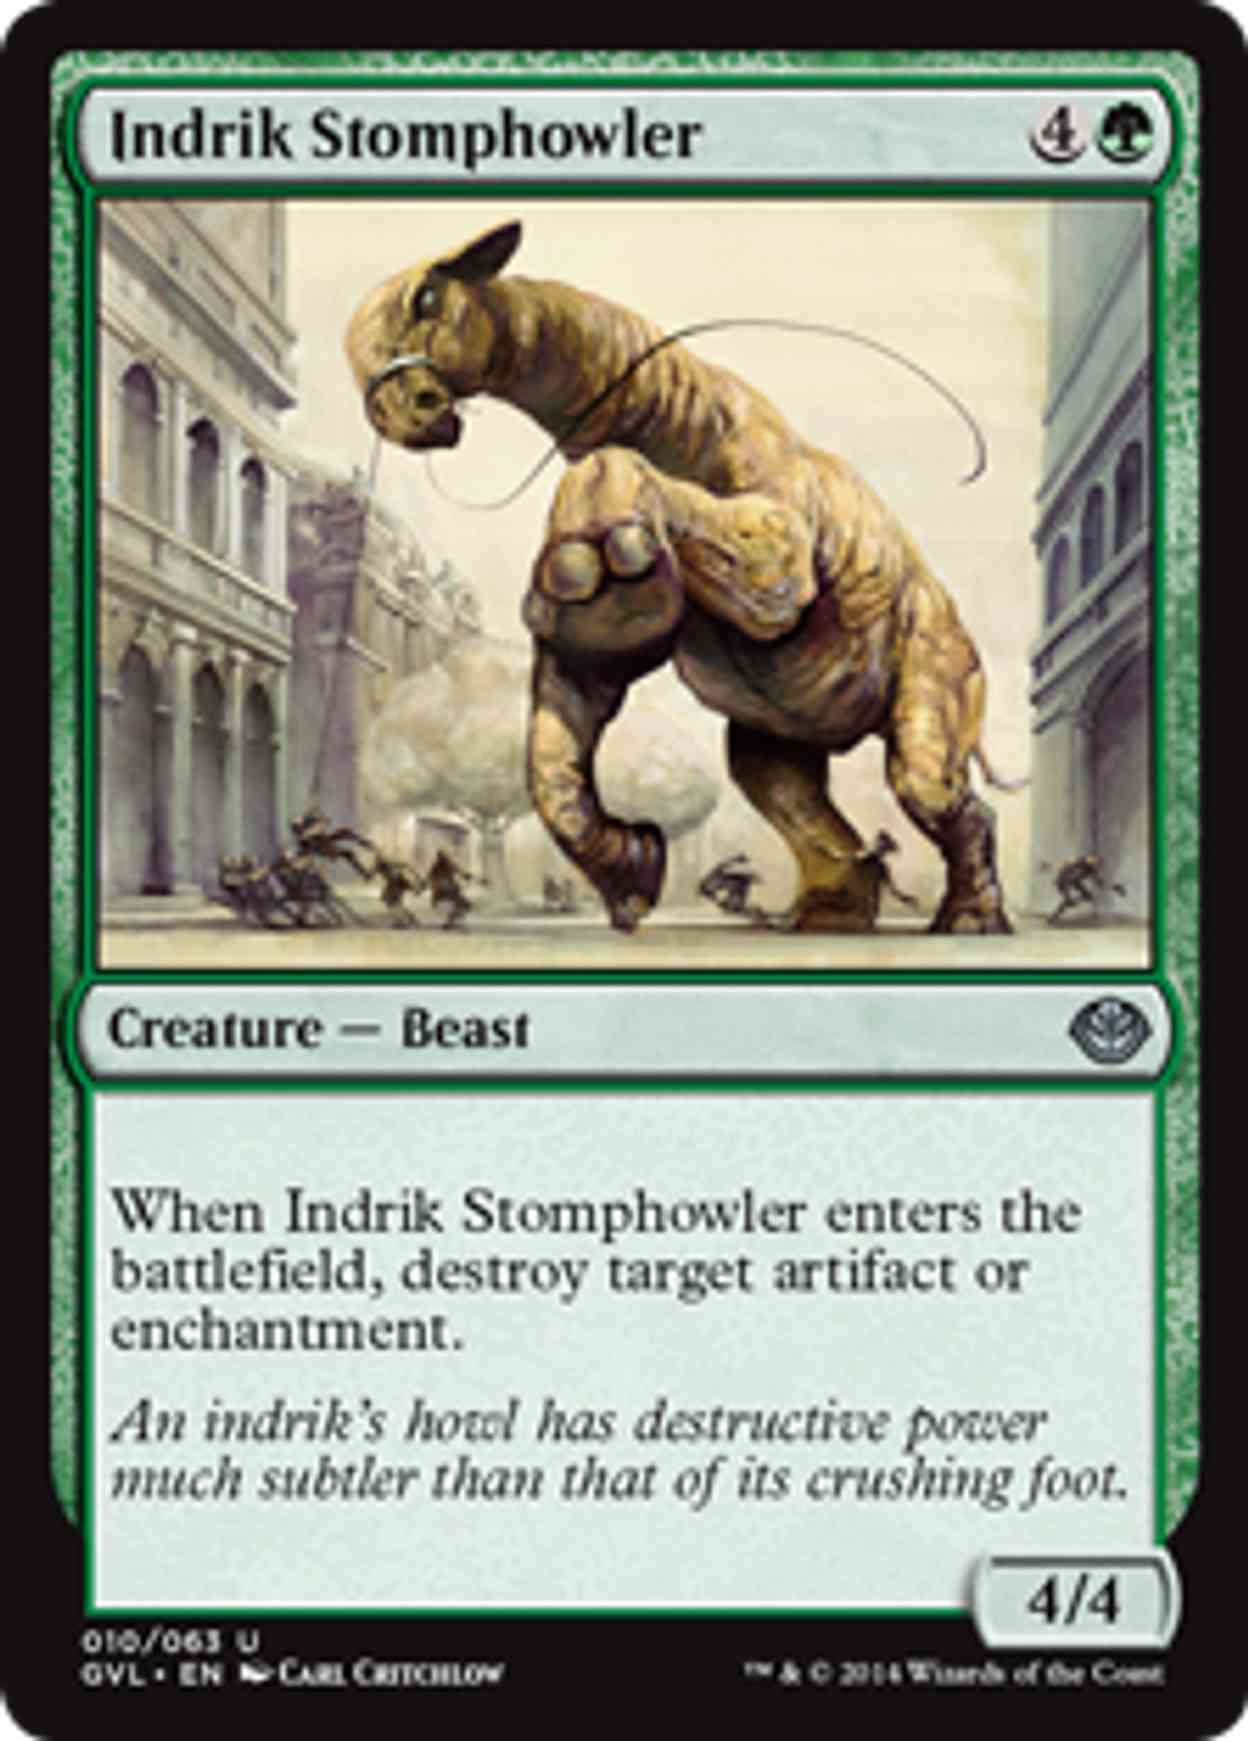 Indrik Stomphowler magic card front